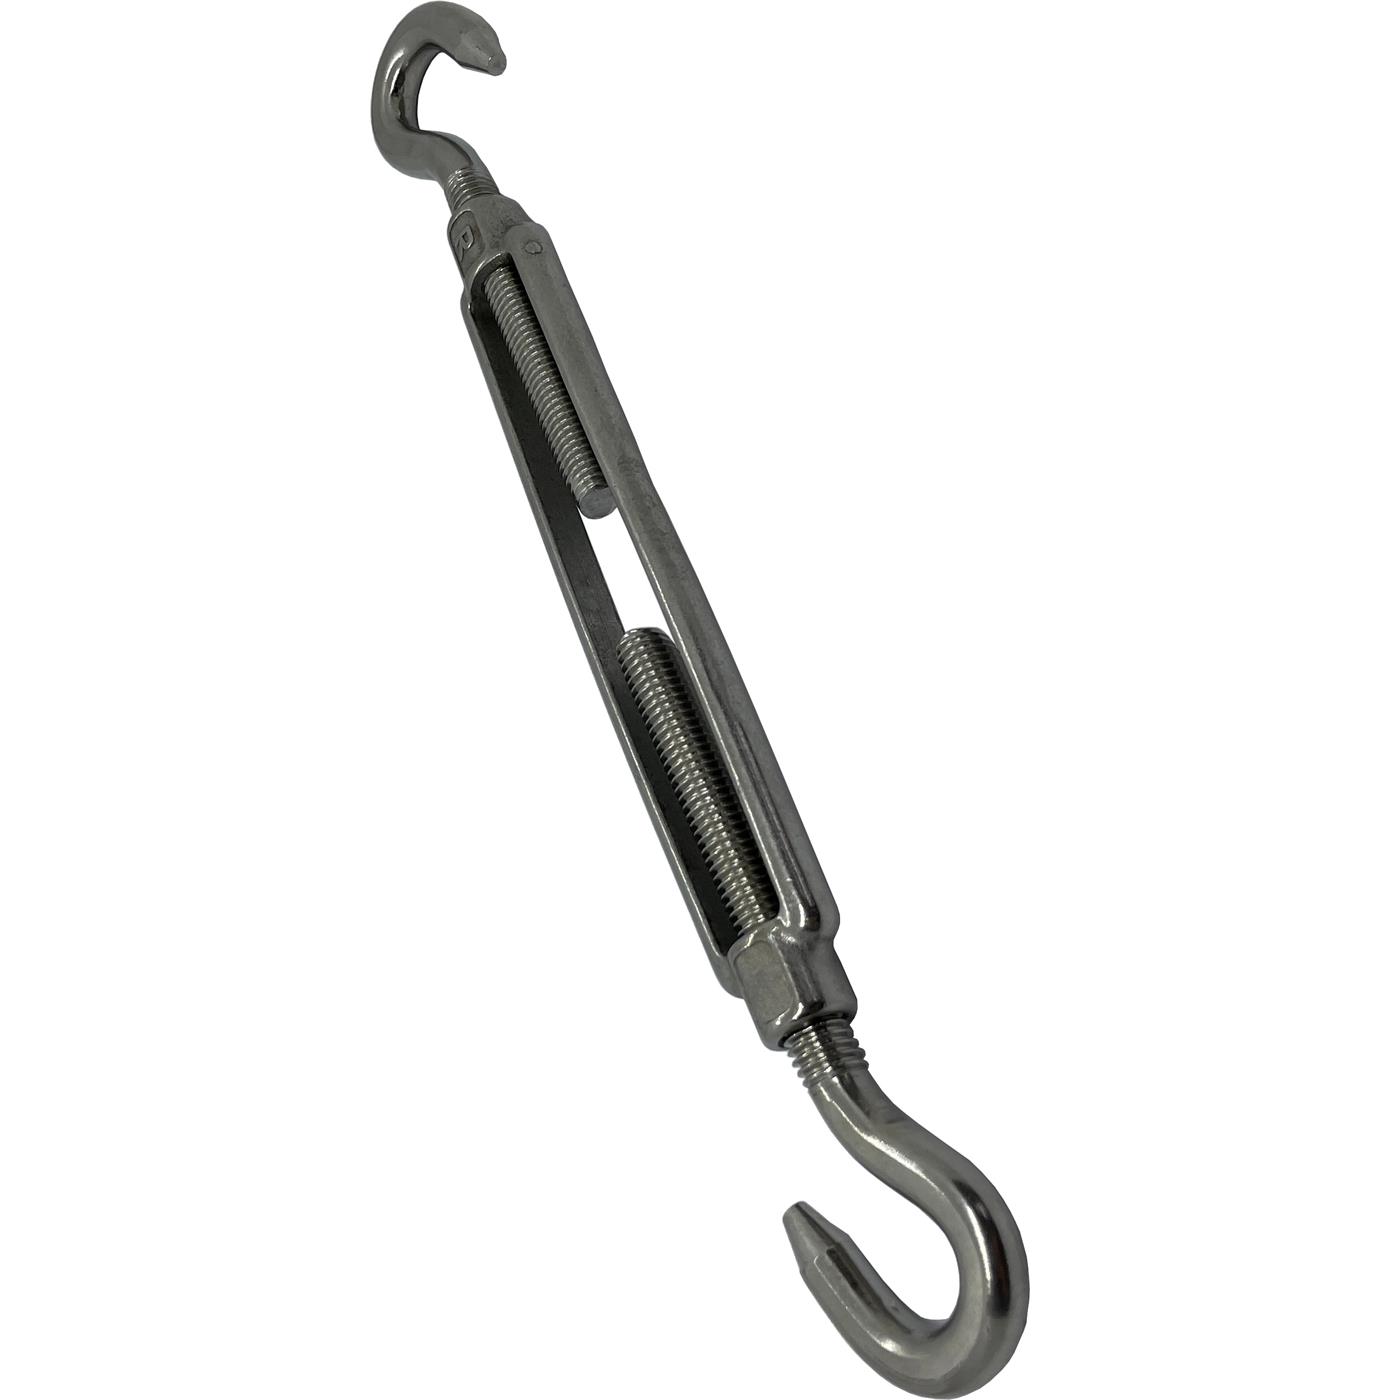 Rope tensioner Hook-Hook Stainless steel V2A 304 M8 Turnbuckle Shroud clamp